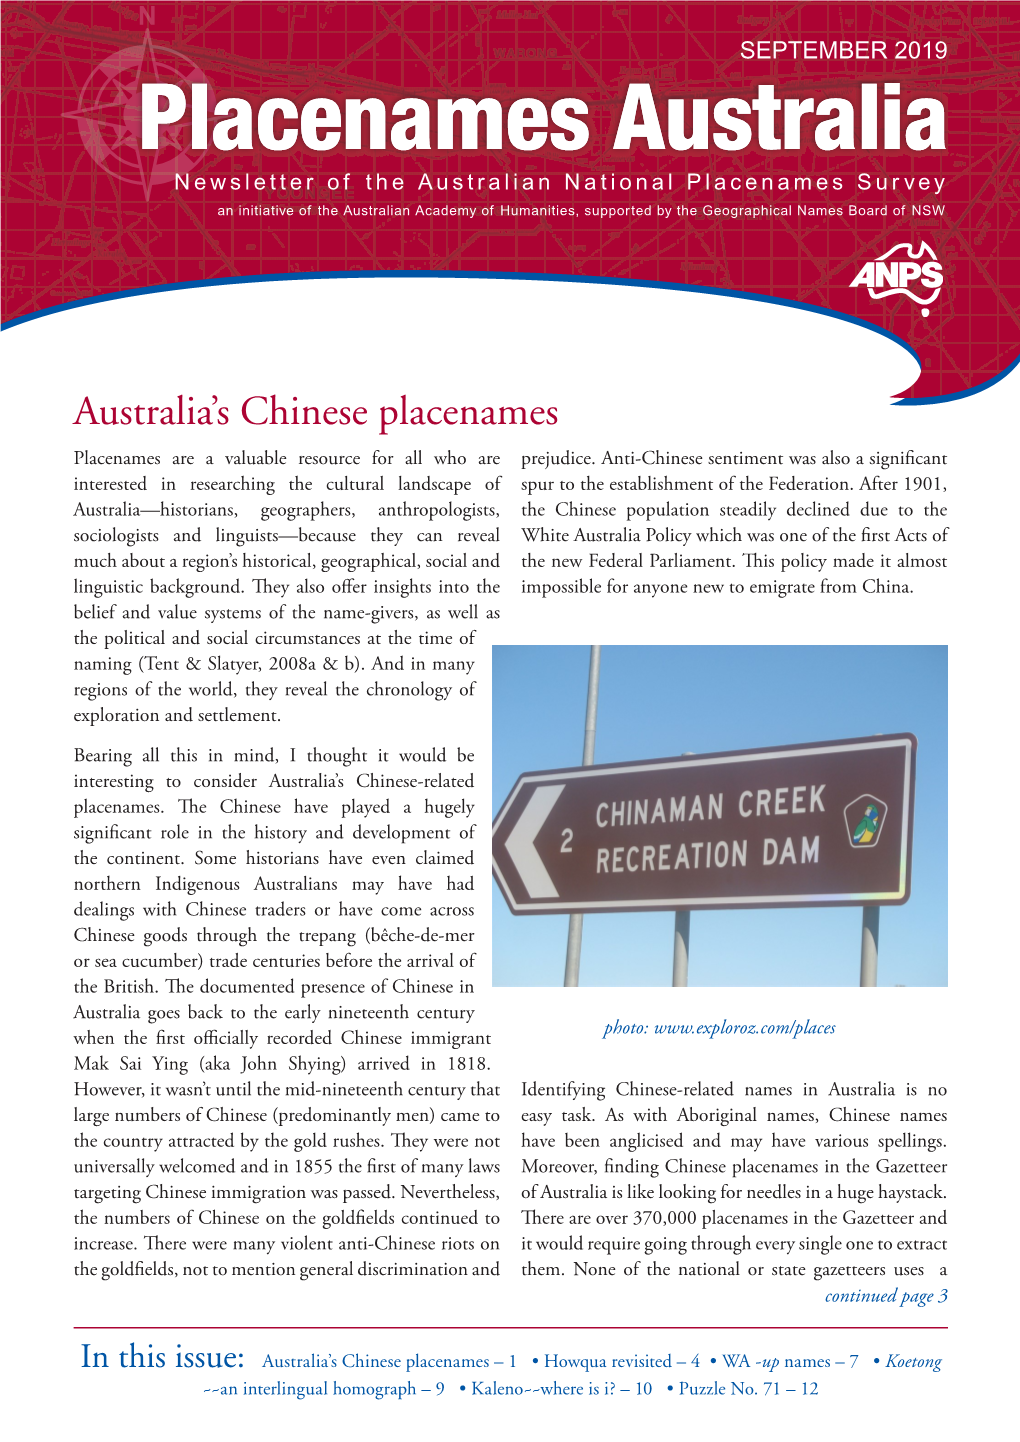 Australia's Chinese Placenames